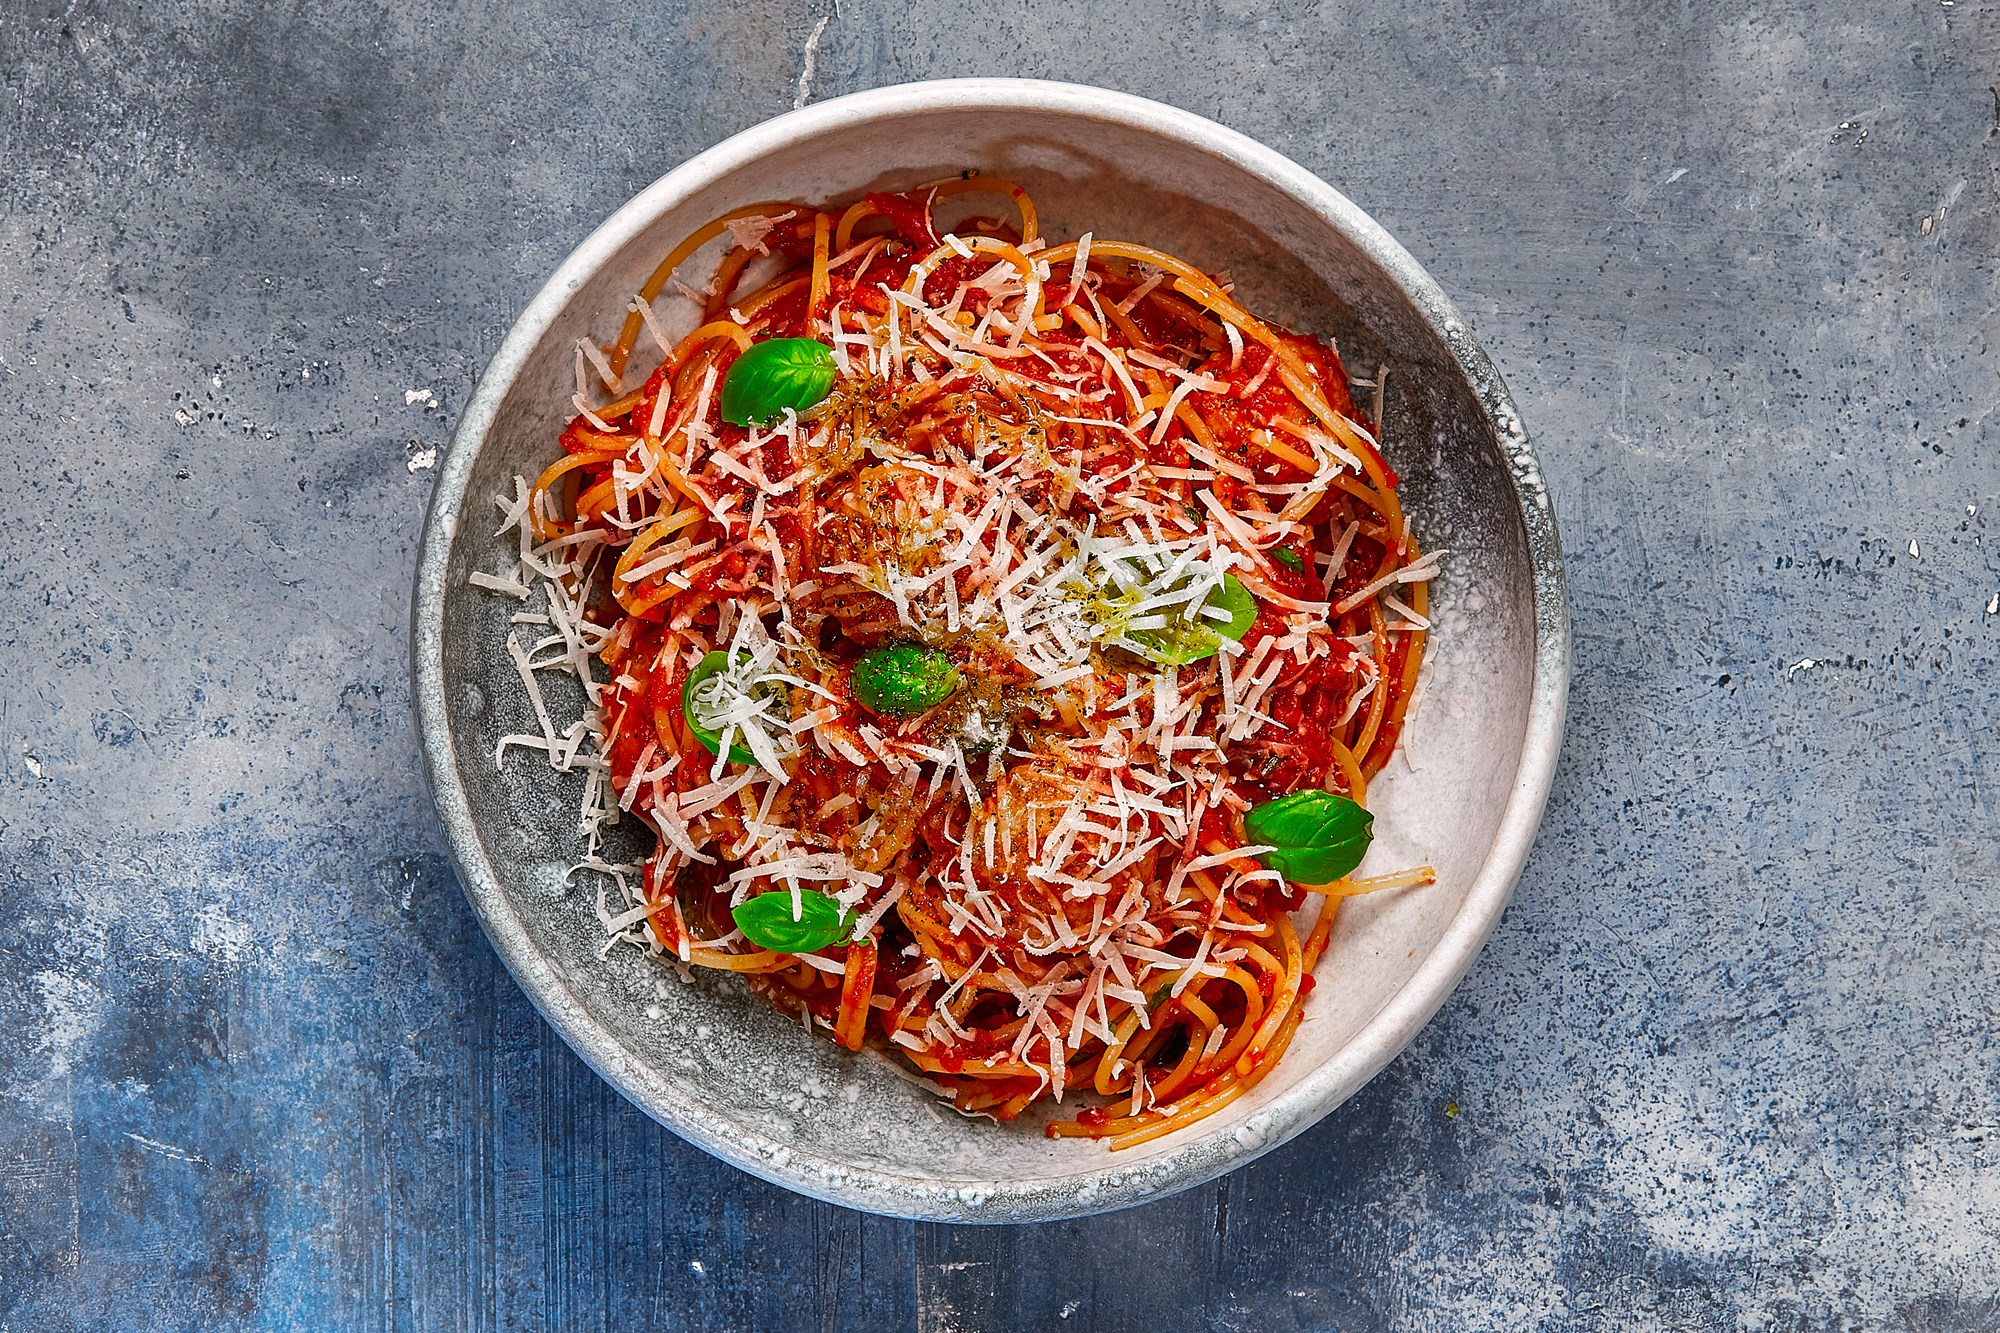 Just-heat: italienske kødboller i tomatsauce med spaghetti, basilikum og parmesan